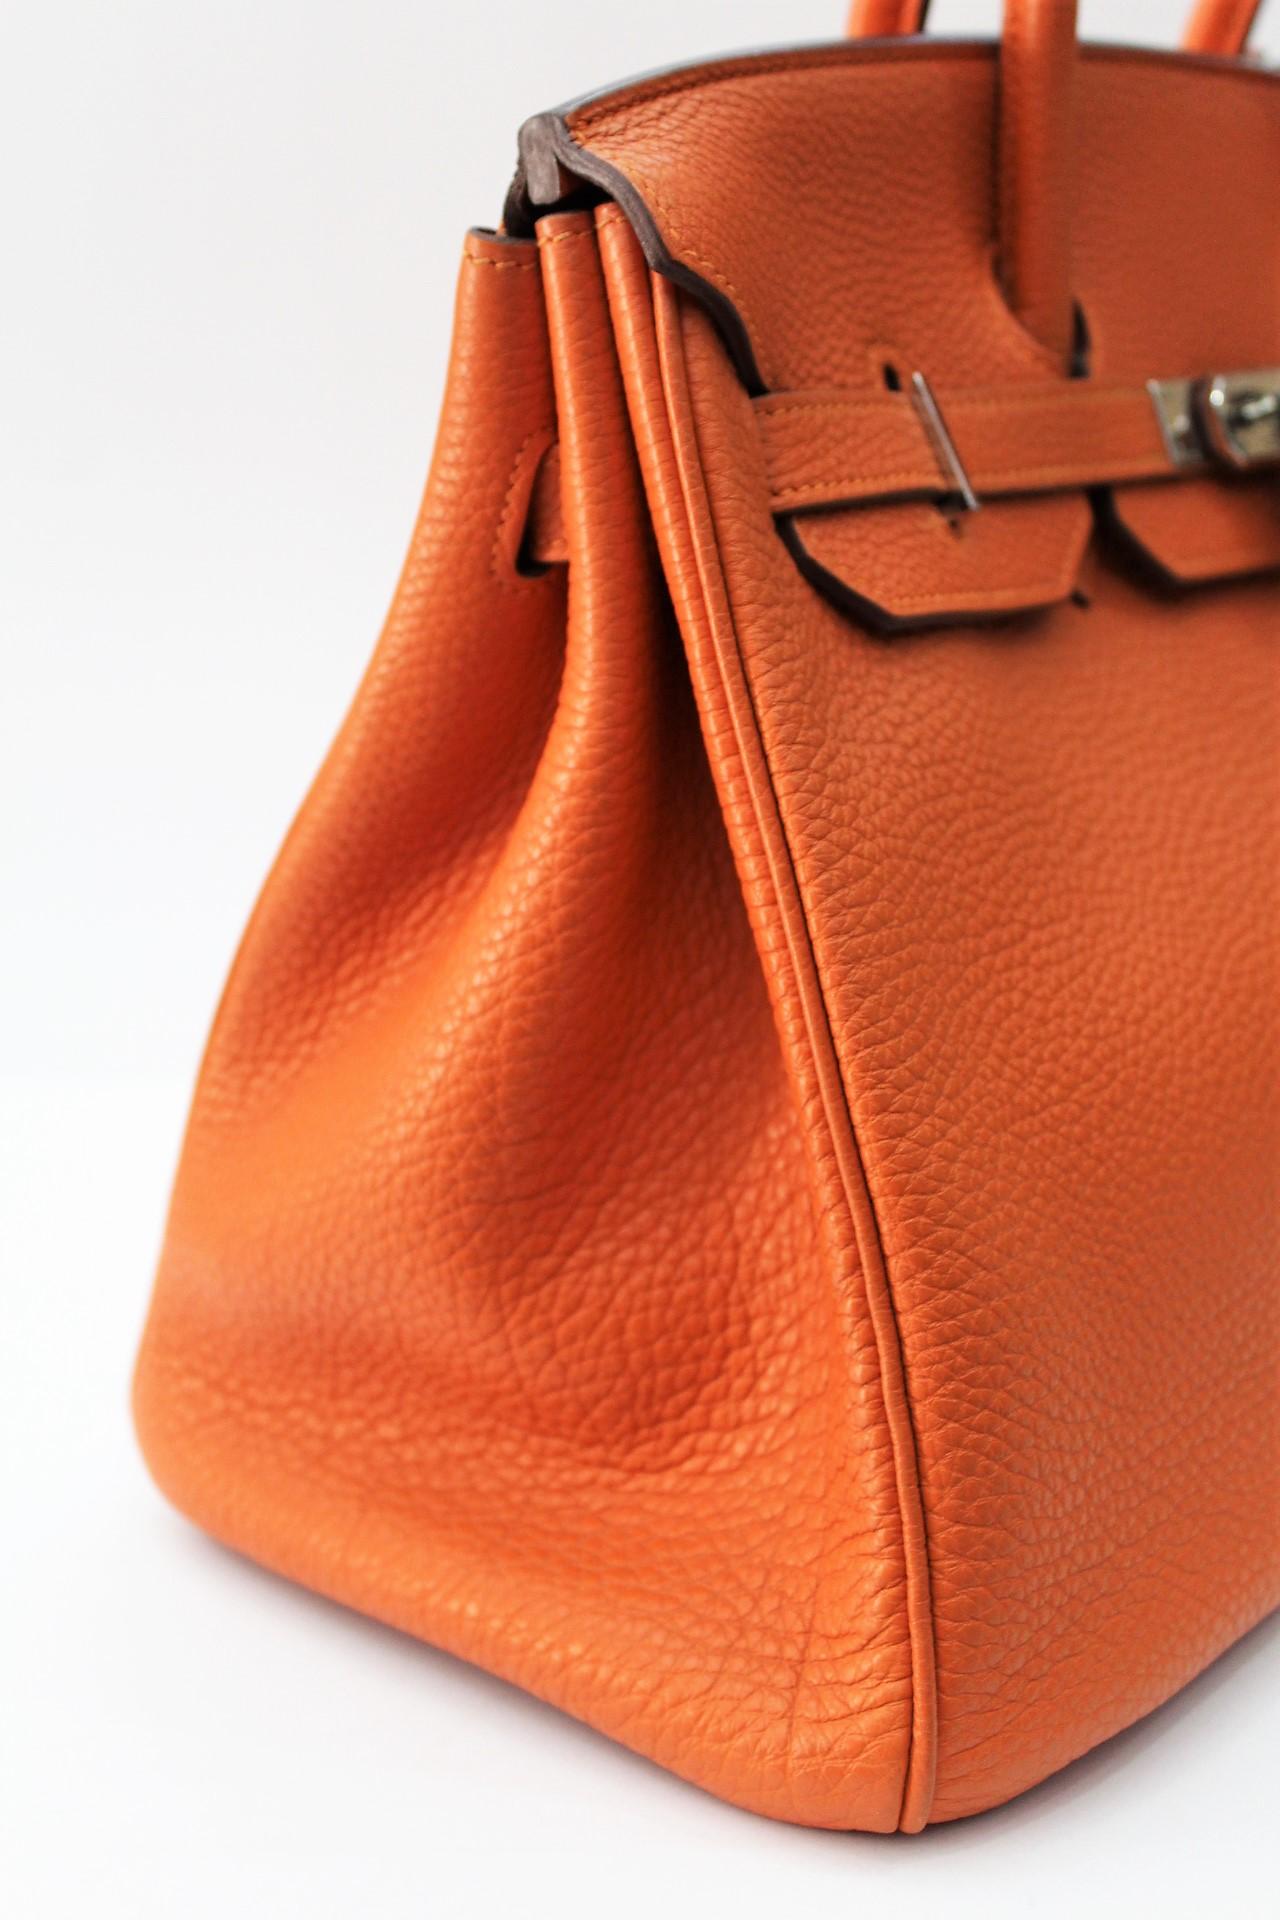 Hermès Birkin 35 Orange Togo Top Handle Bag 1